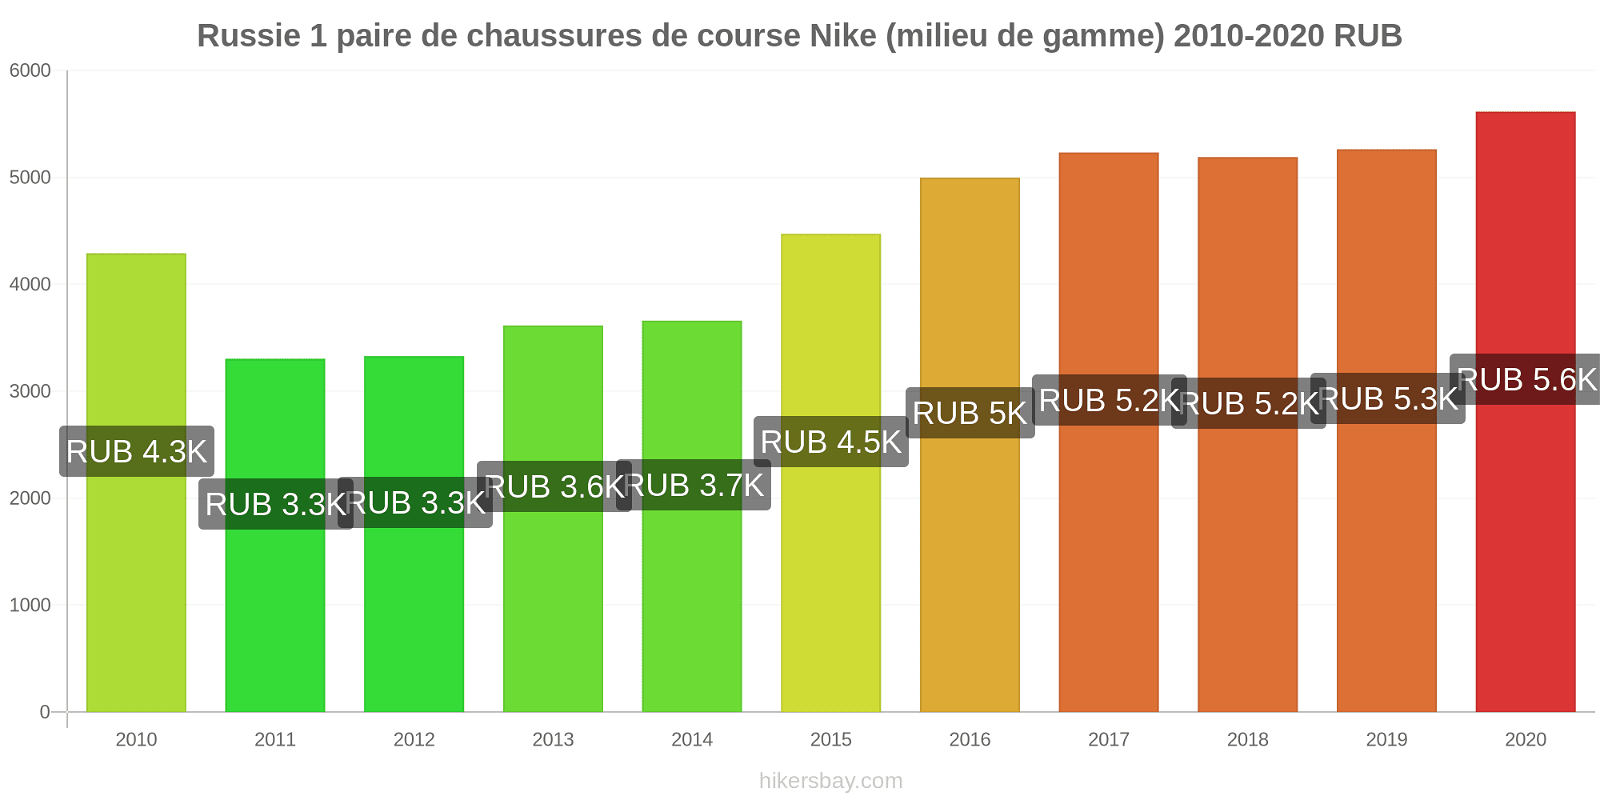 Russie changements de prix 1 paire de chaussures de course Nike (milieu de gamme) hikersbay.com